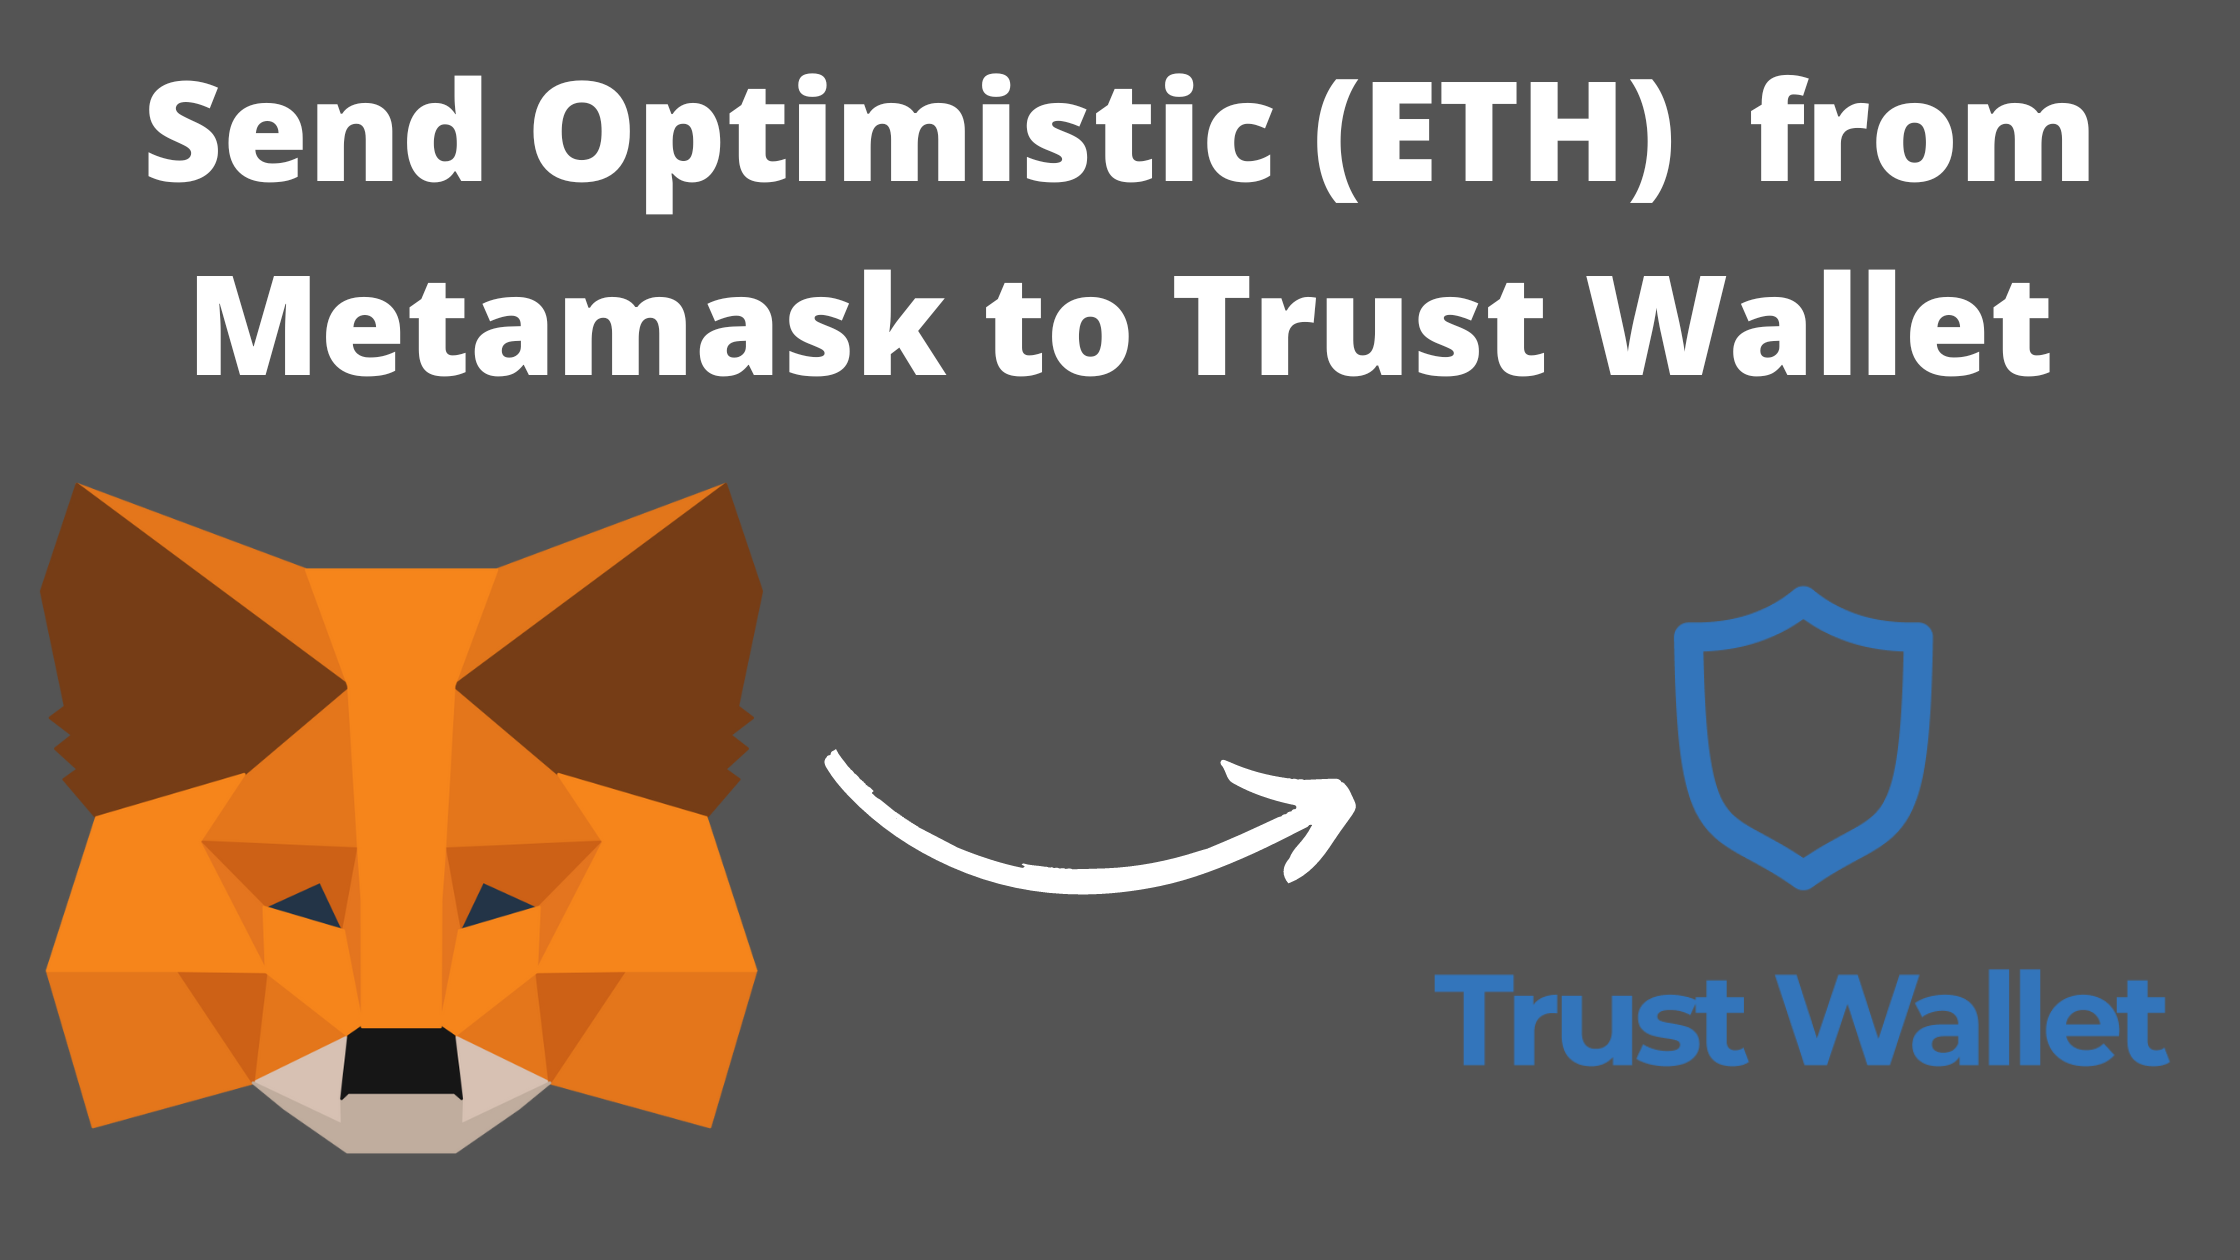 Send Optimisitc (ETH) from MetaMask to TrustWallet